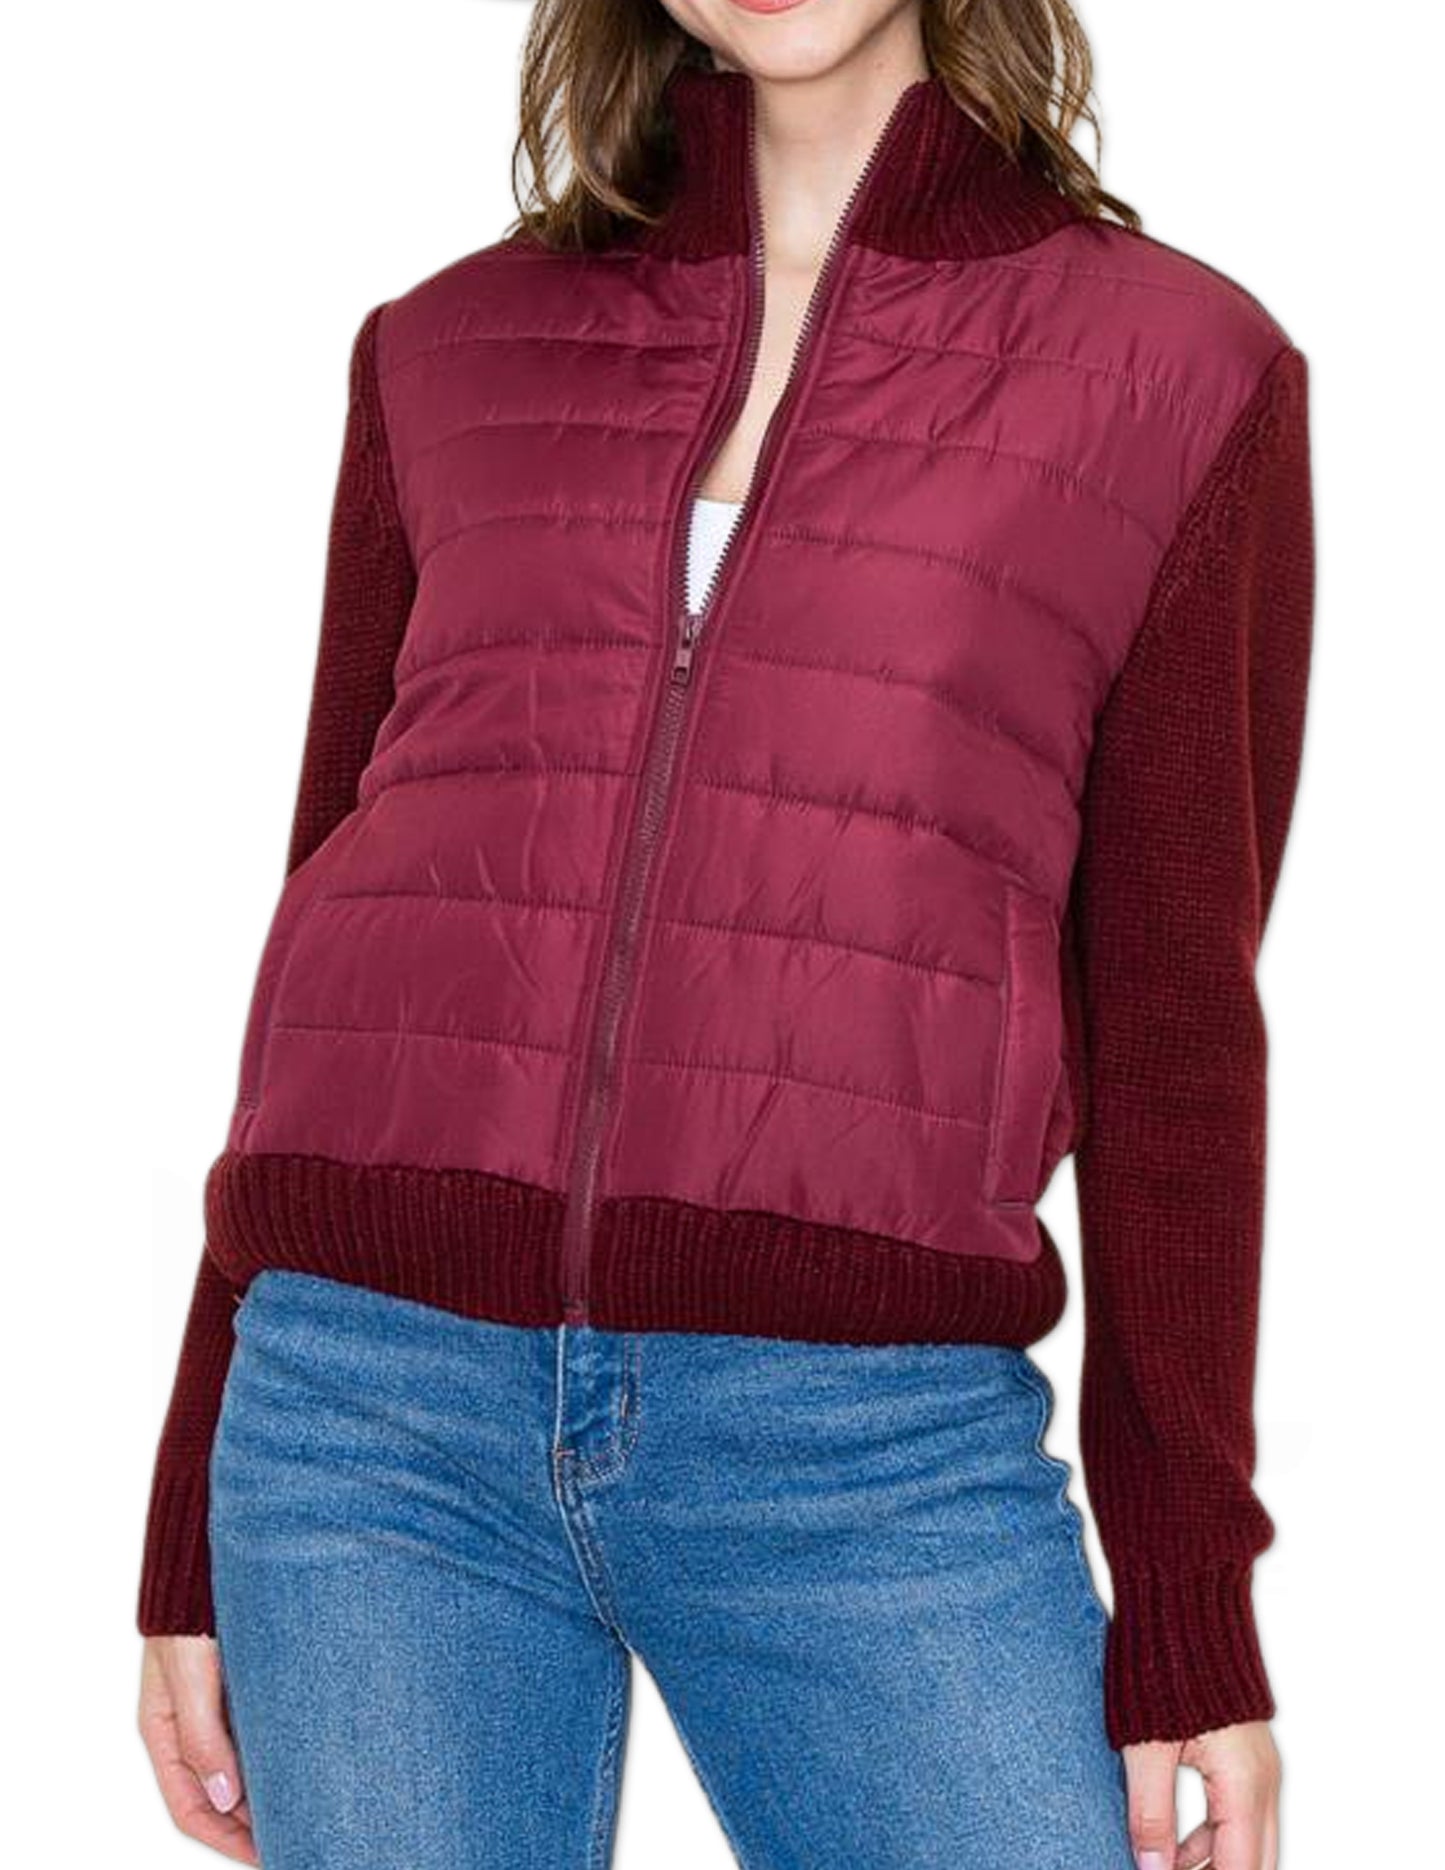 High Collar Hybrid Sweater Jacket - Burgundy